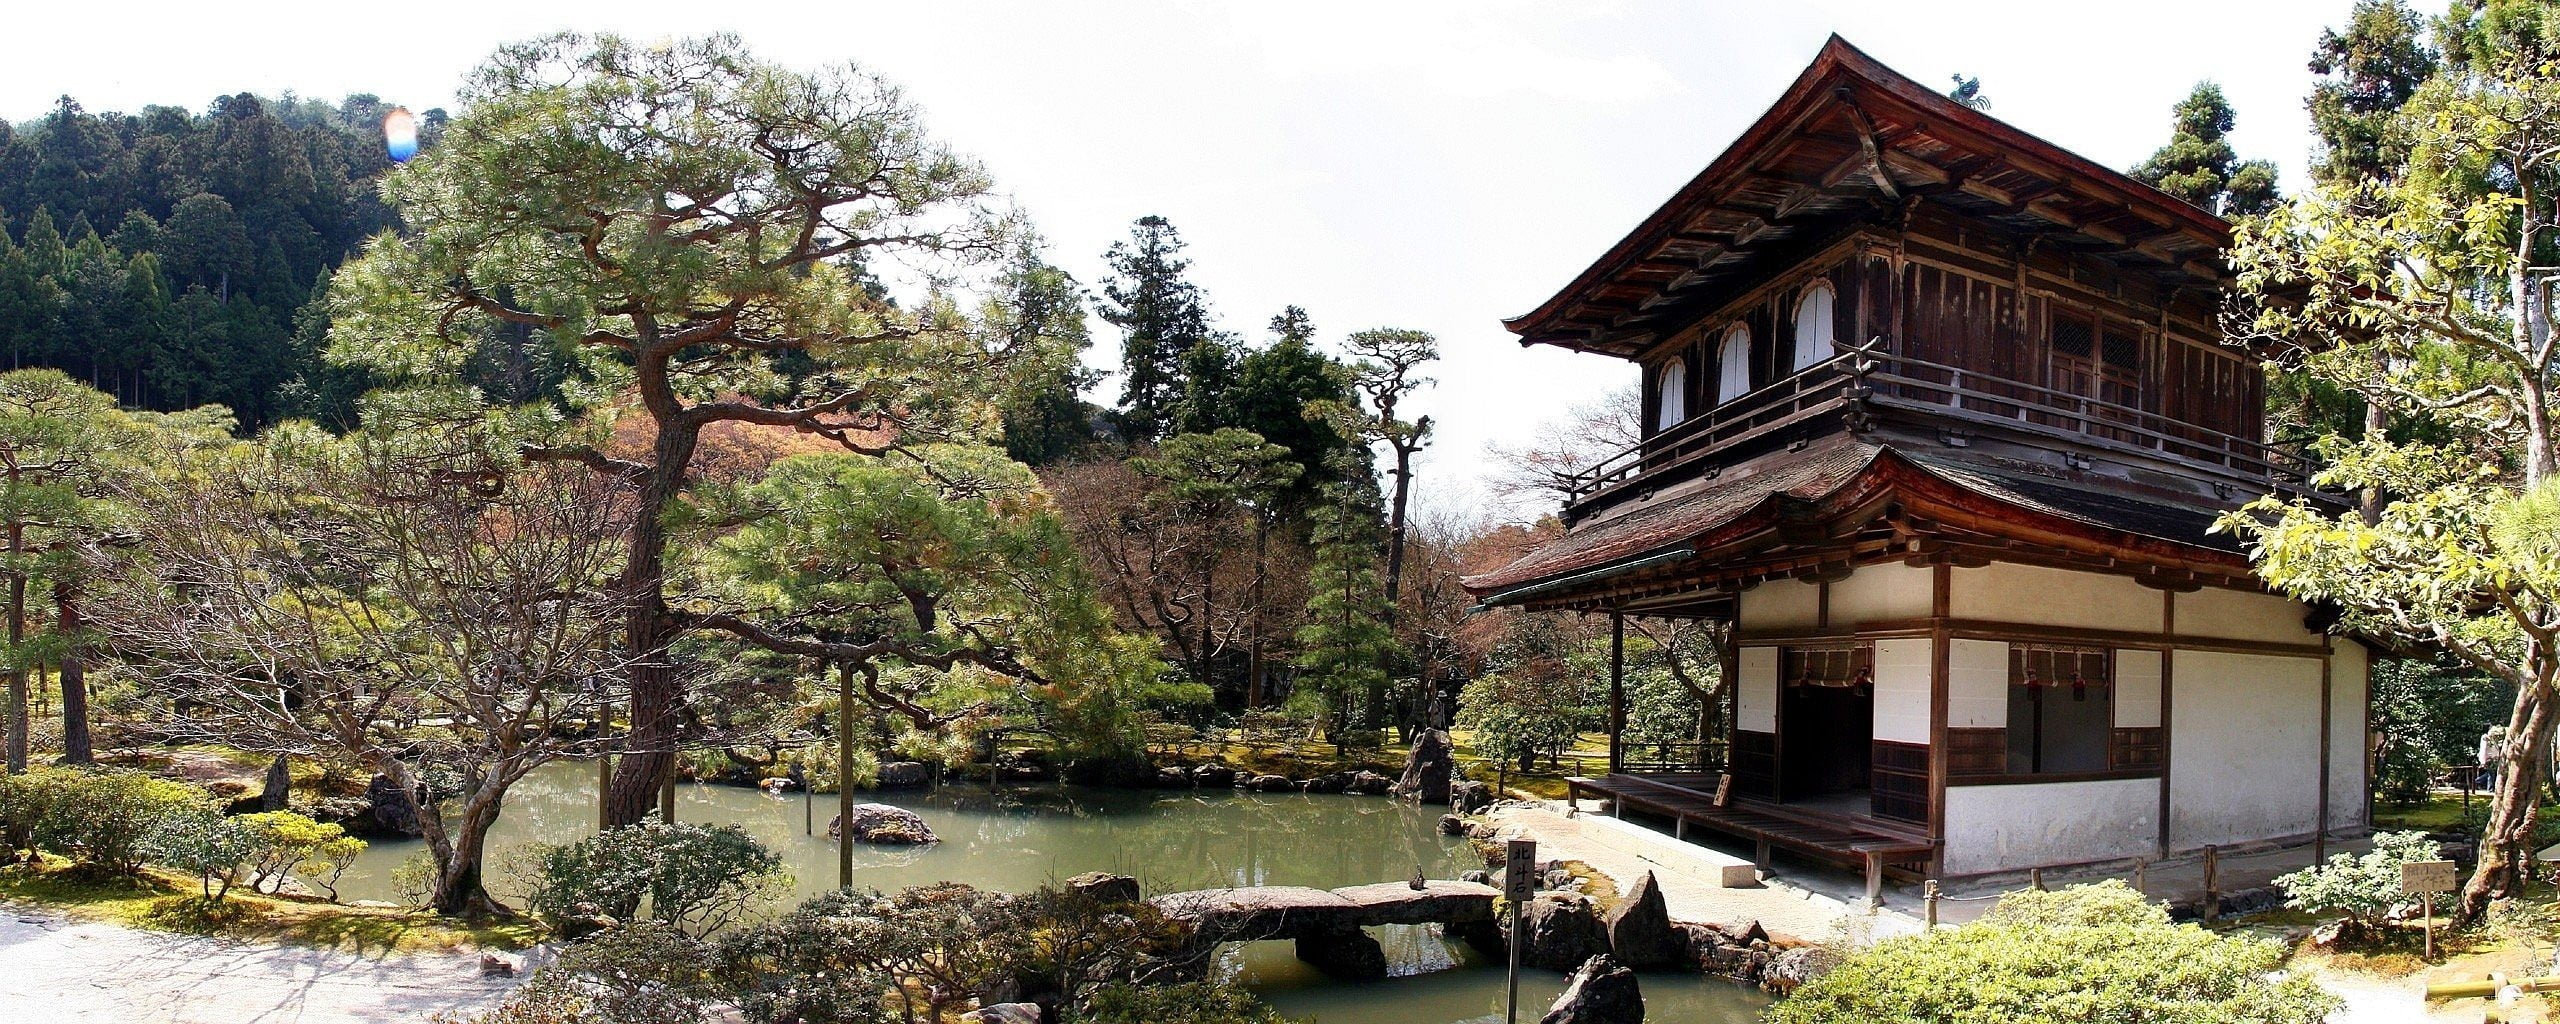 white and brown wooden house, Japanese Garden, garden